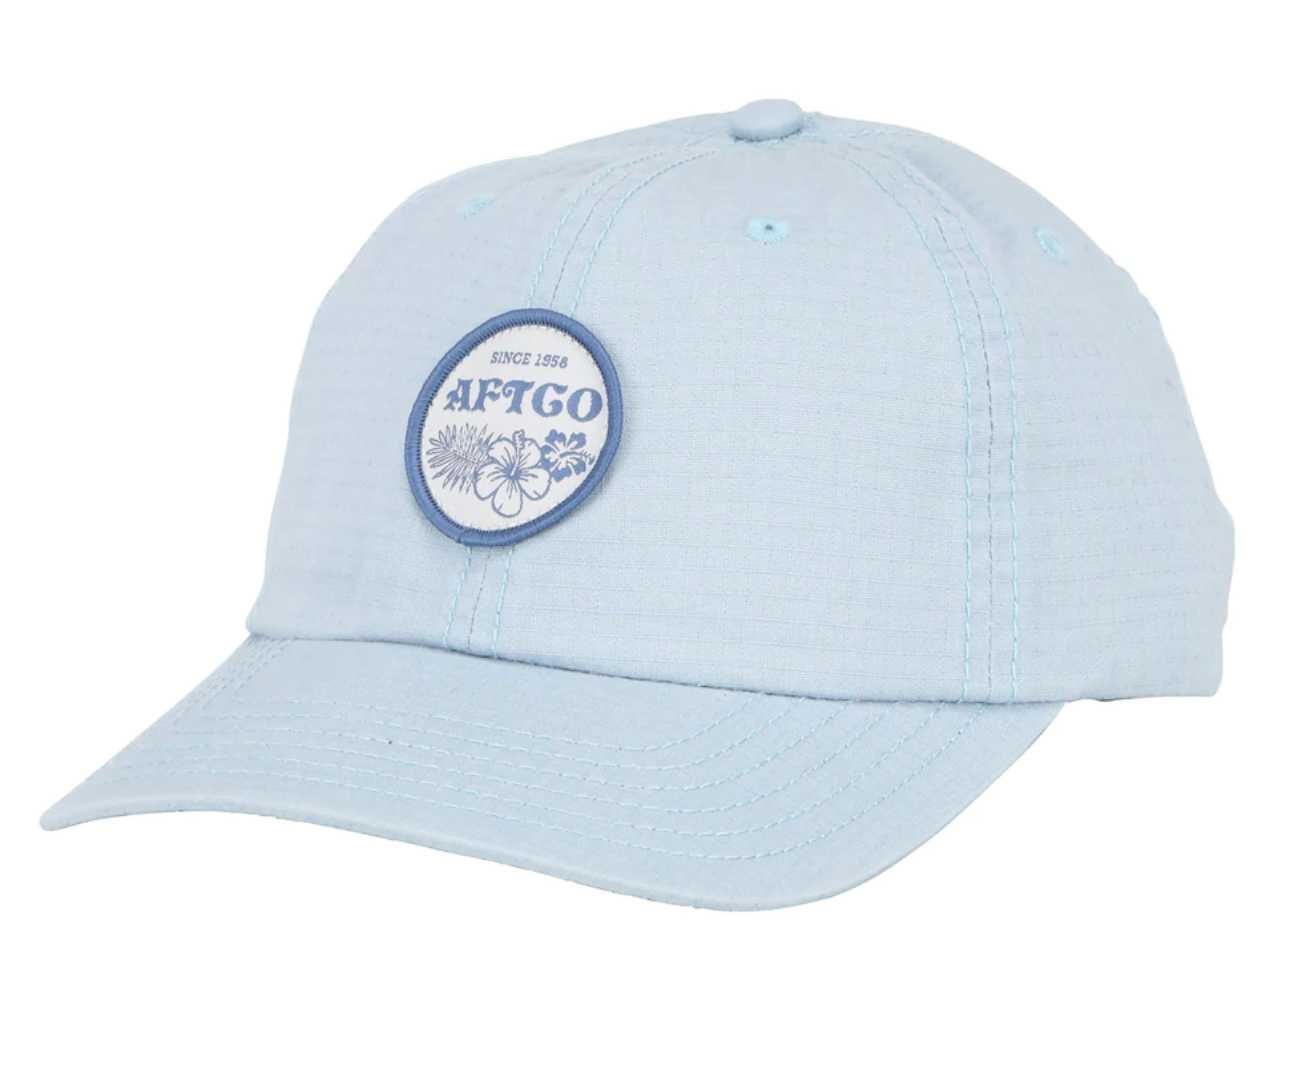 AFTCO - Women's Floral Shortbill Hat